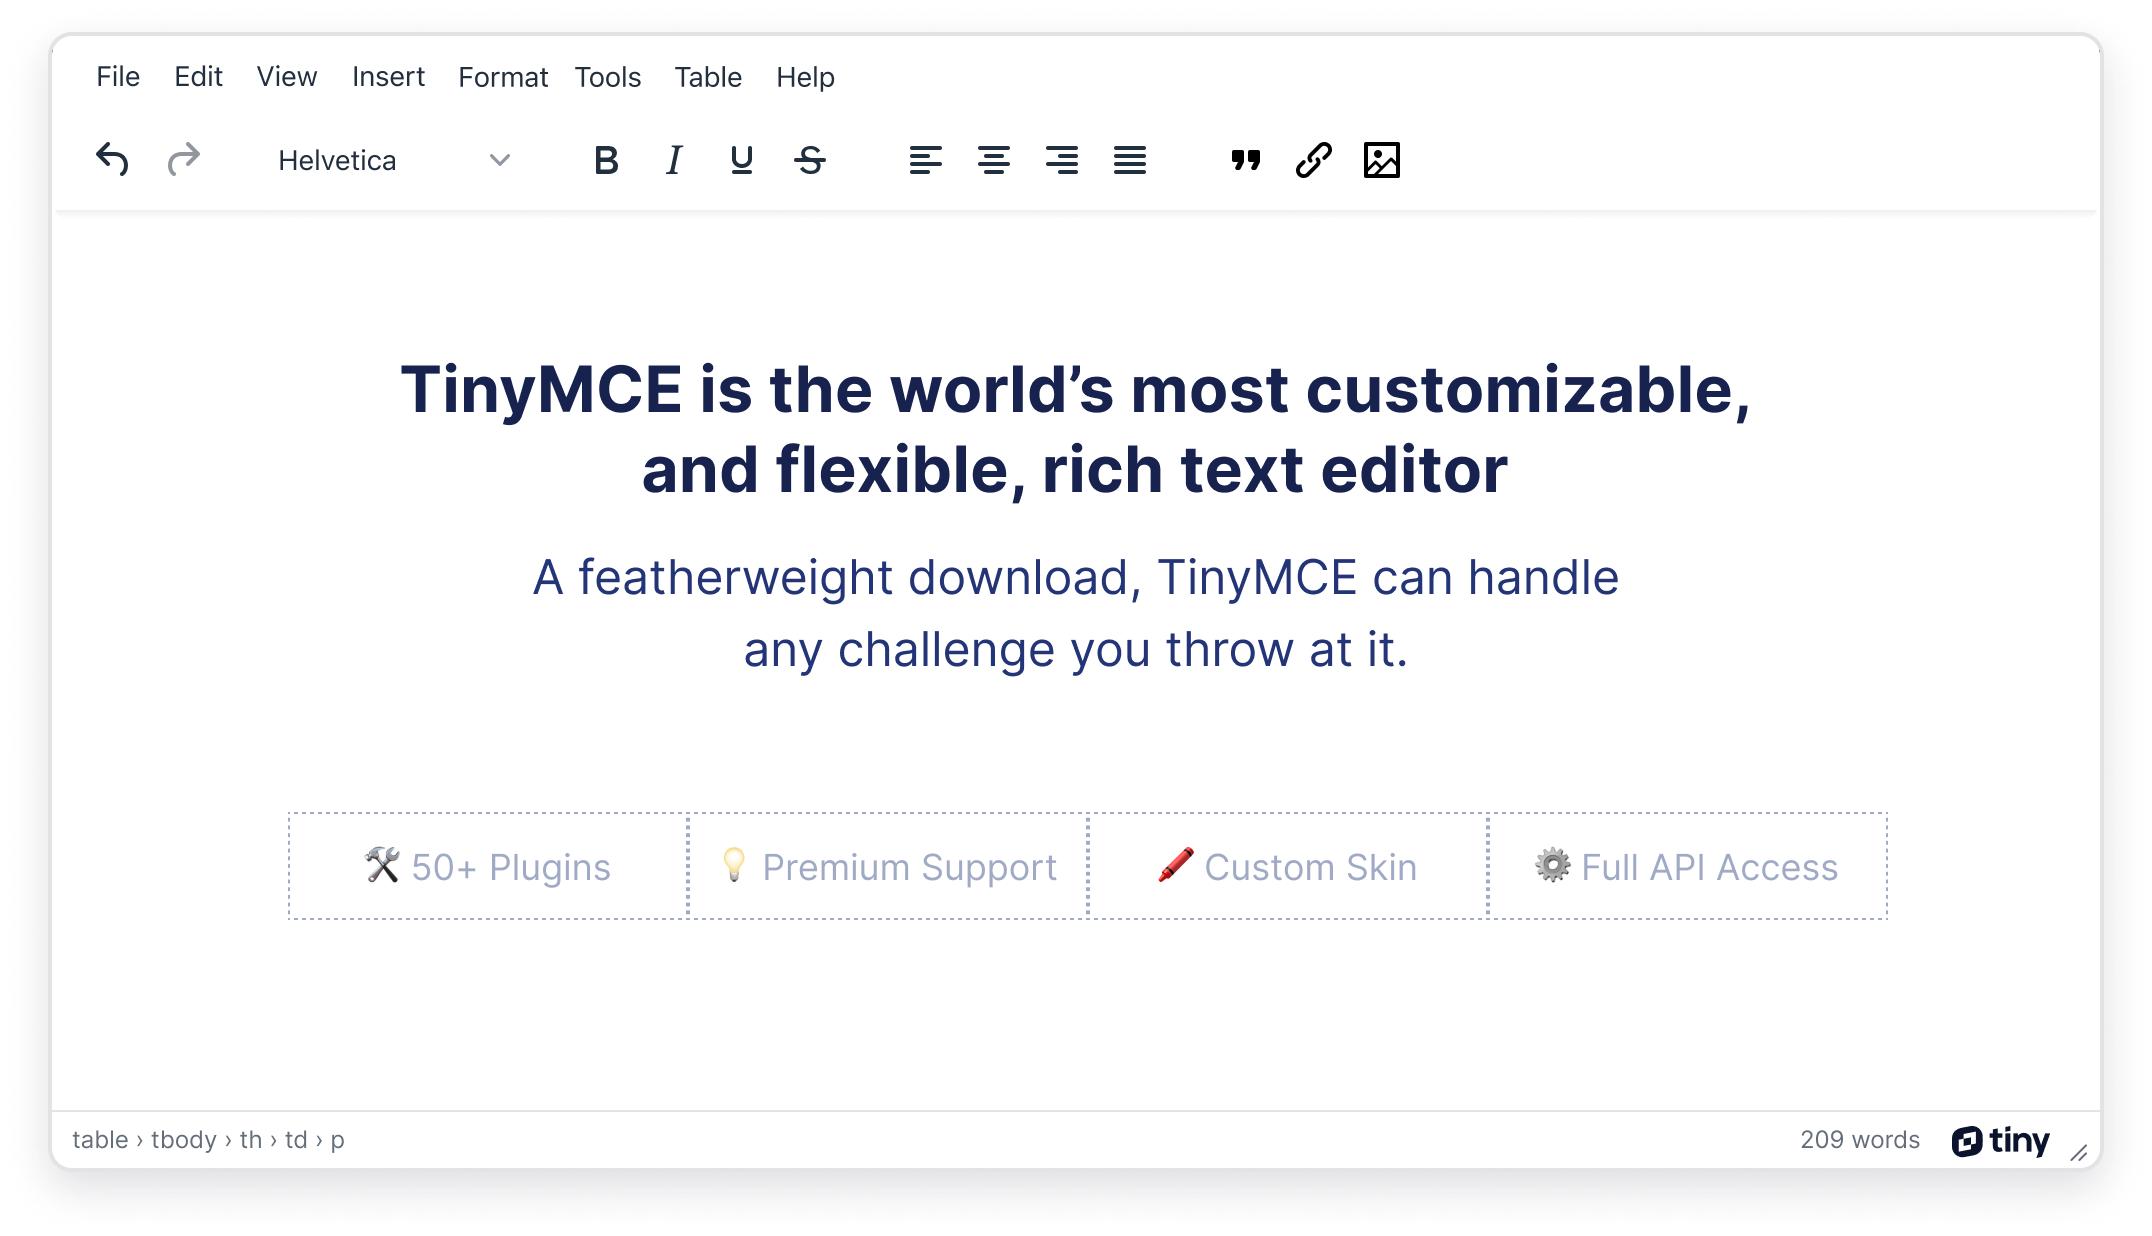 Screenshot of the TinyMCE Editor